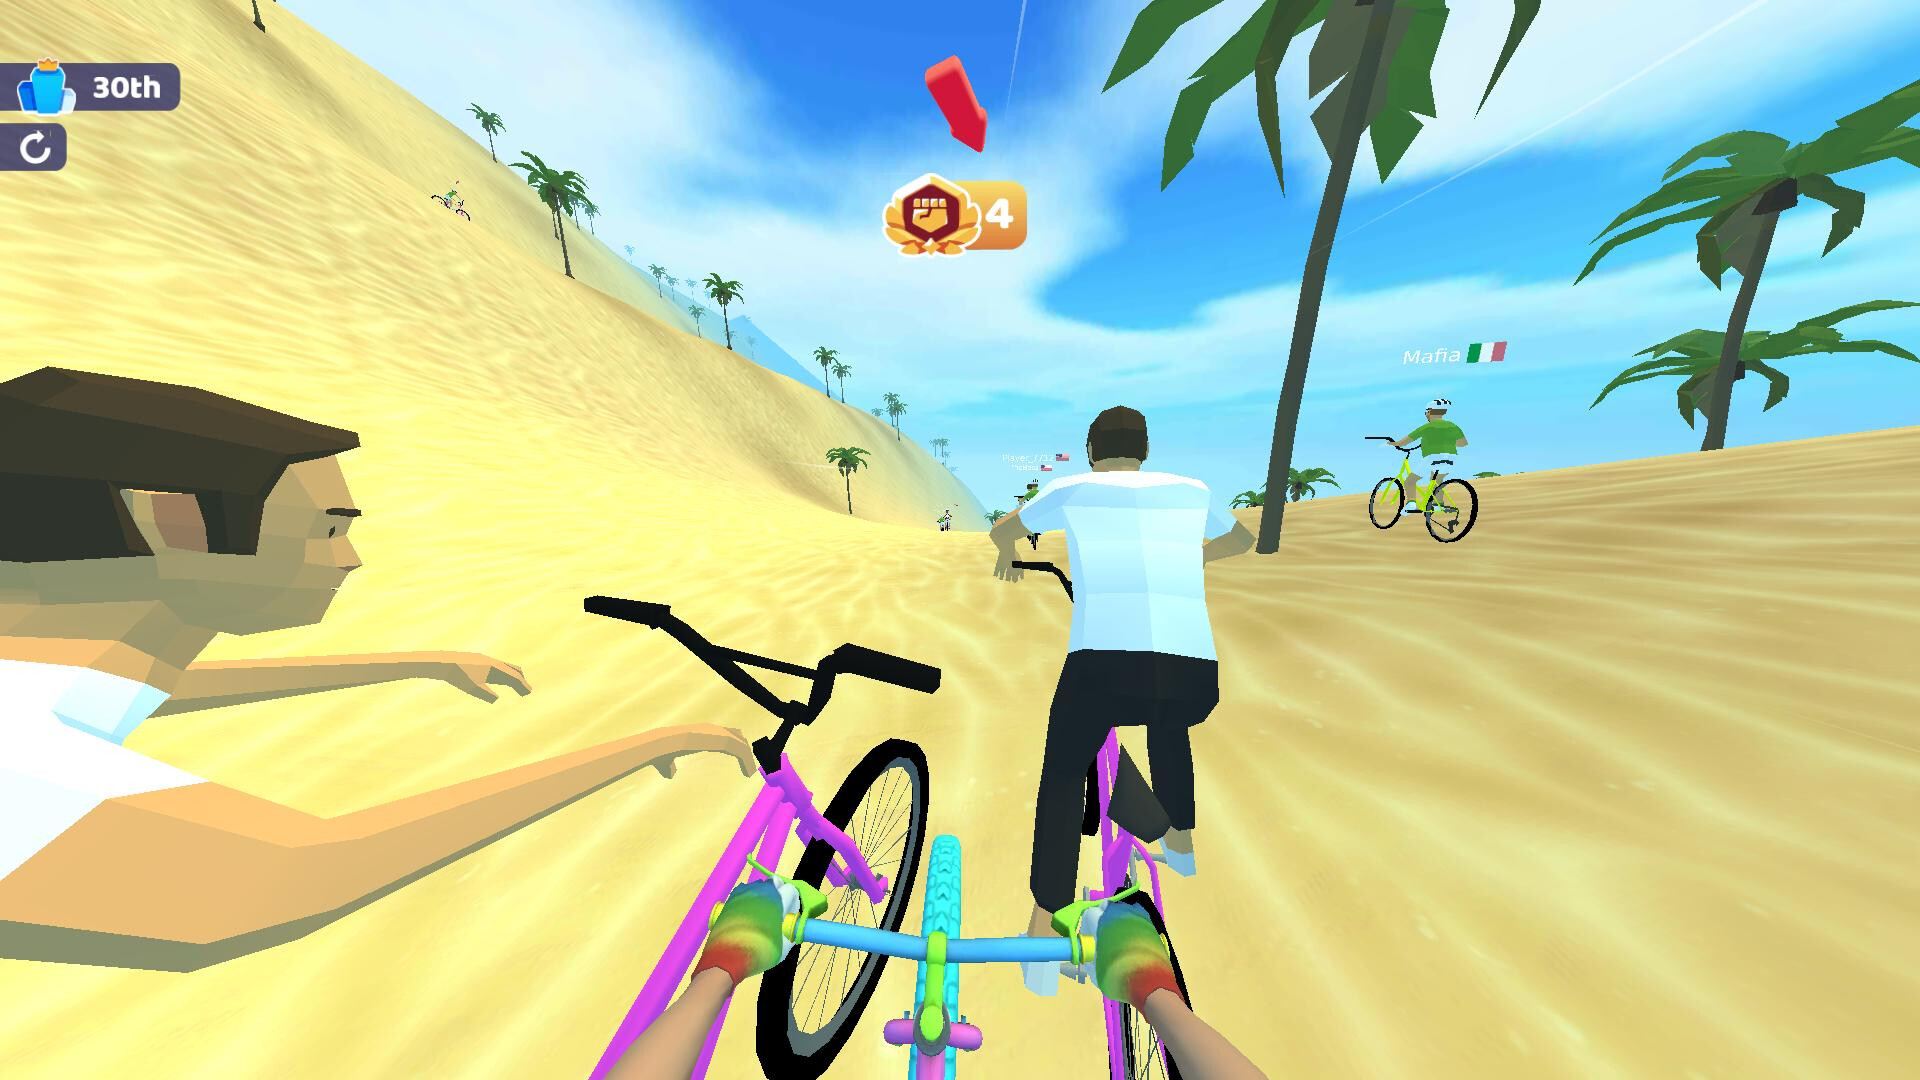 Save 83% on Bicycle Rider Simulator on Steam